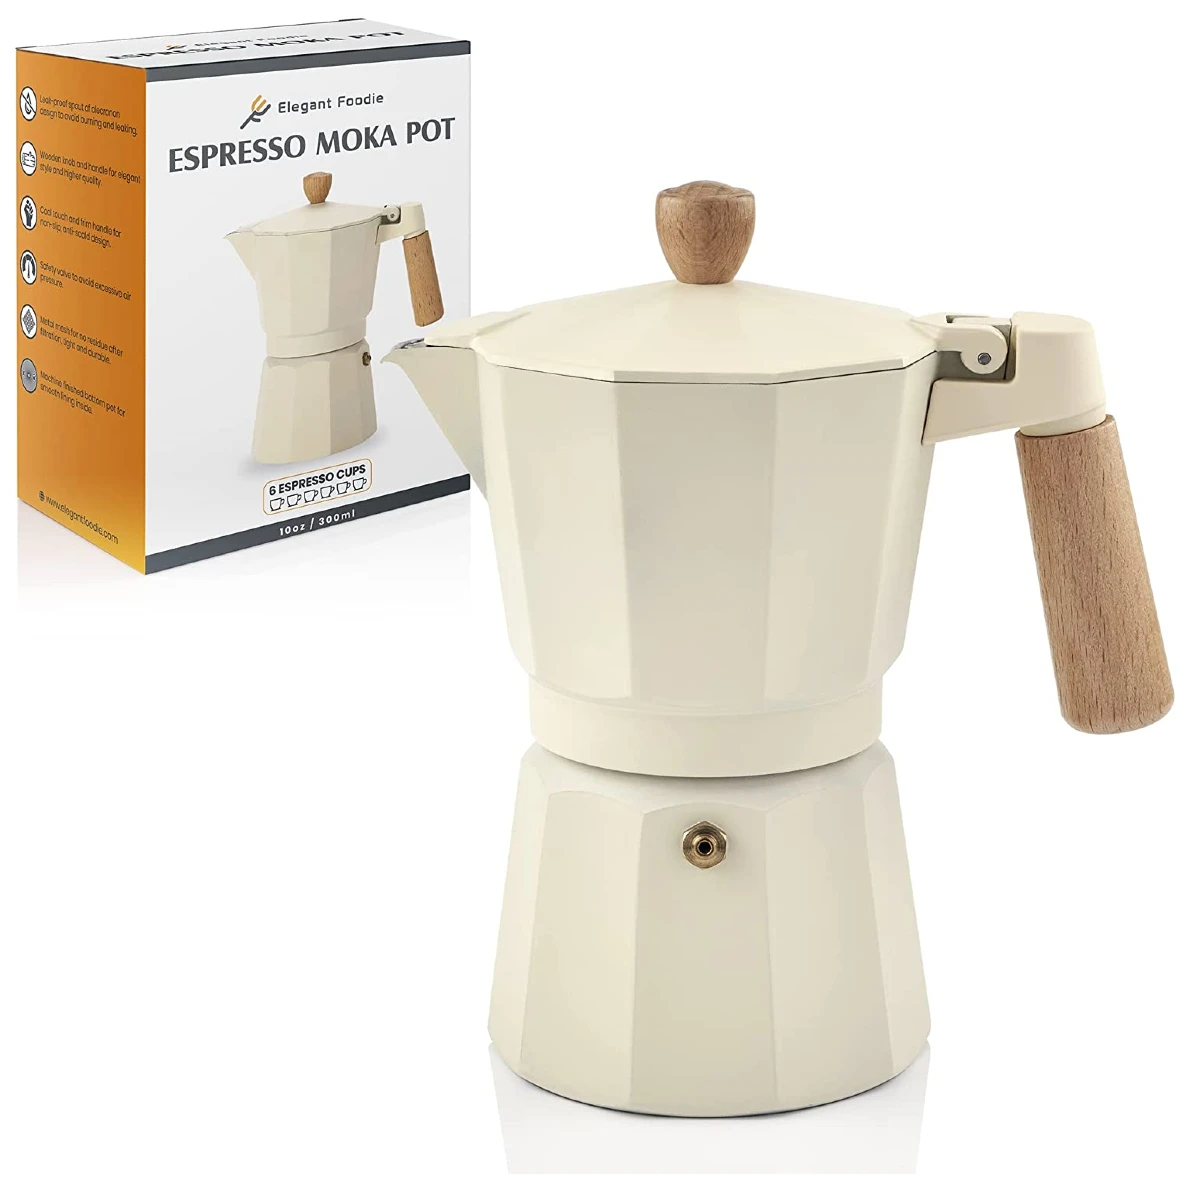 Elegant Foodie Stylish Espresso Moka Pot Cup